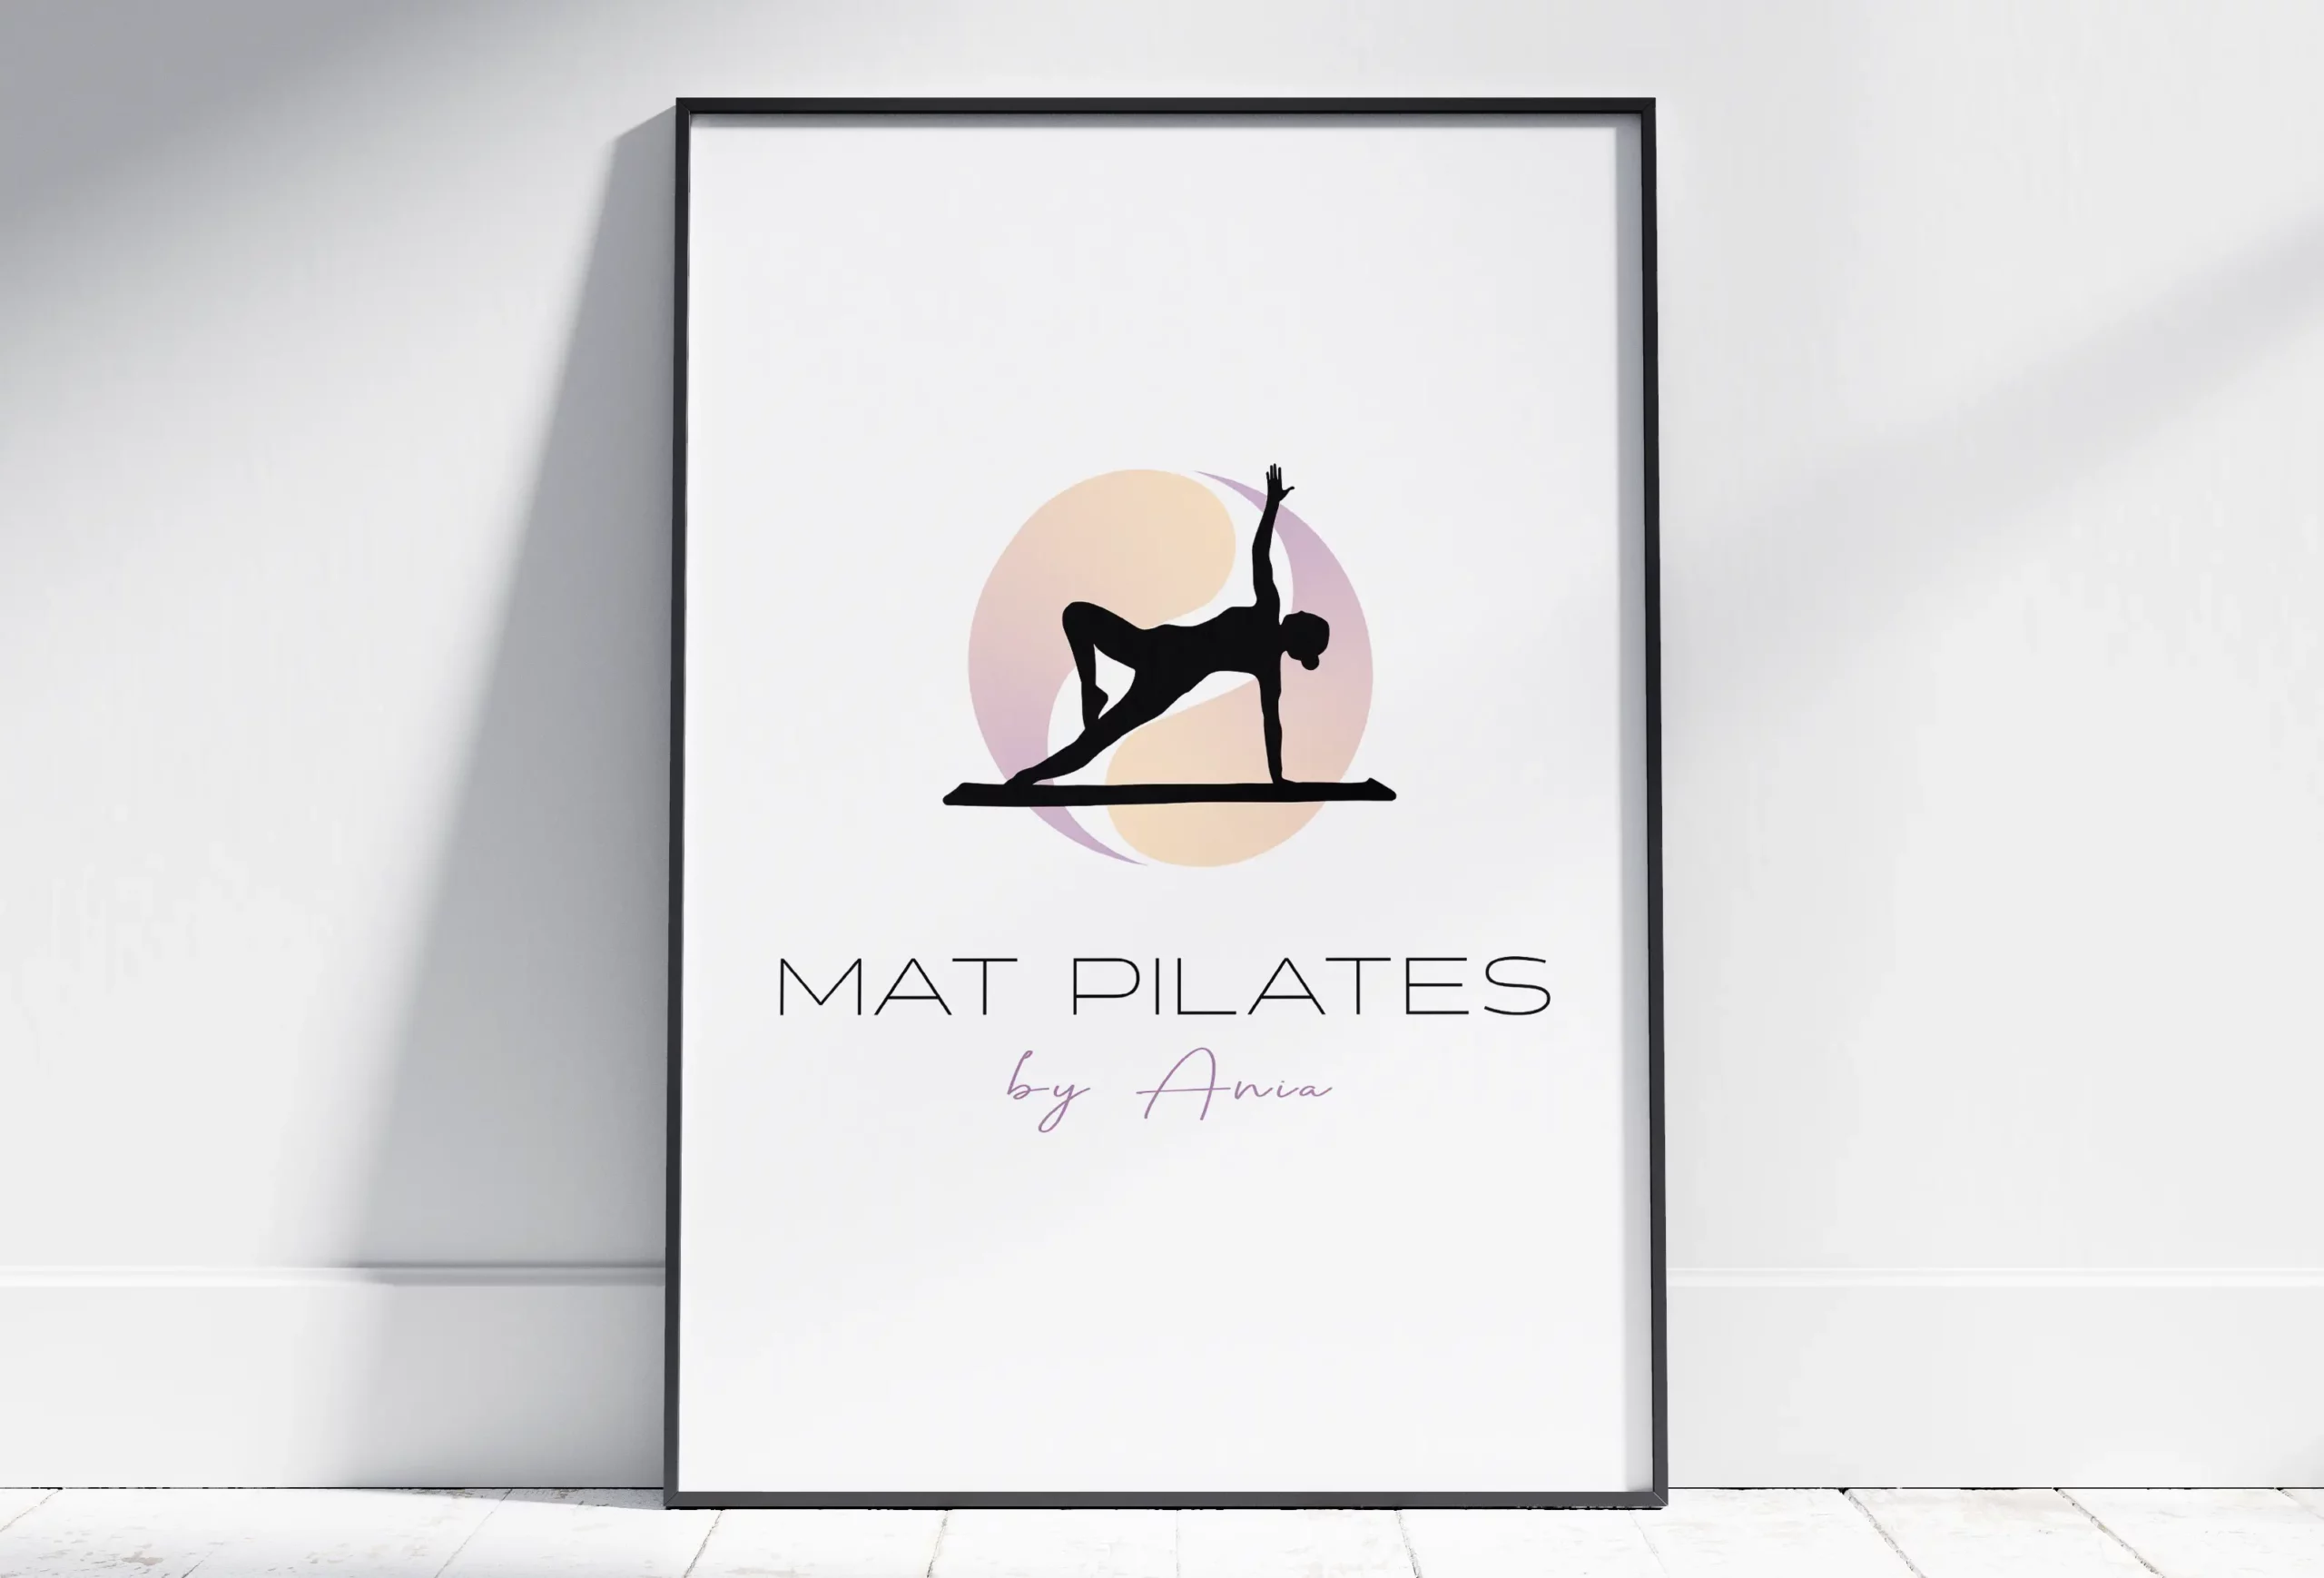 Logo Pilates